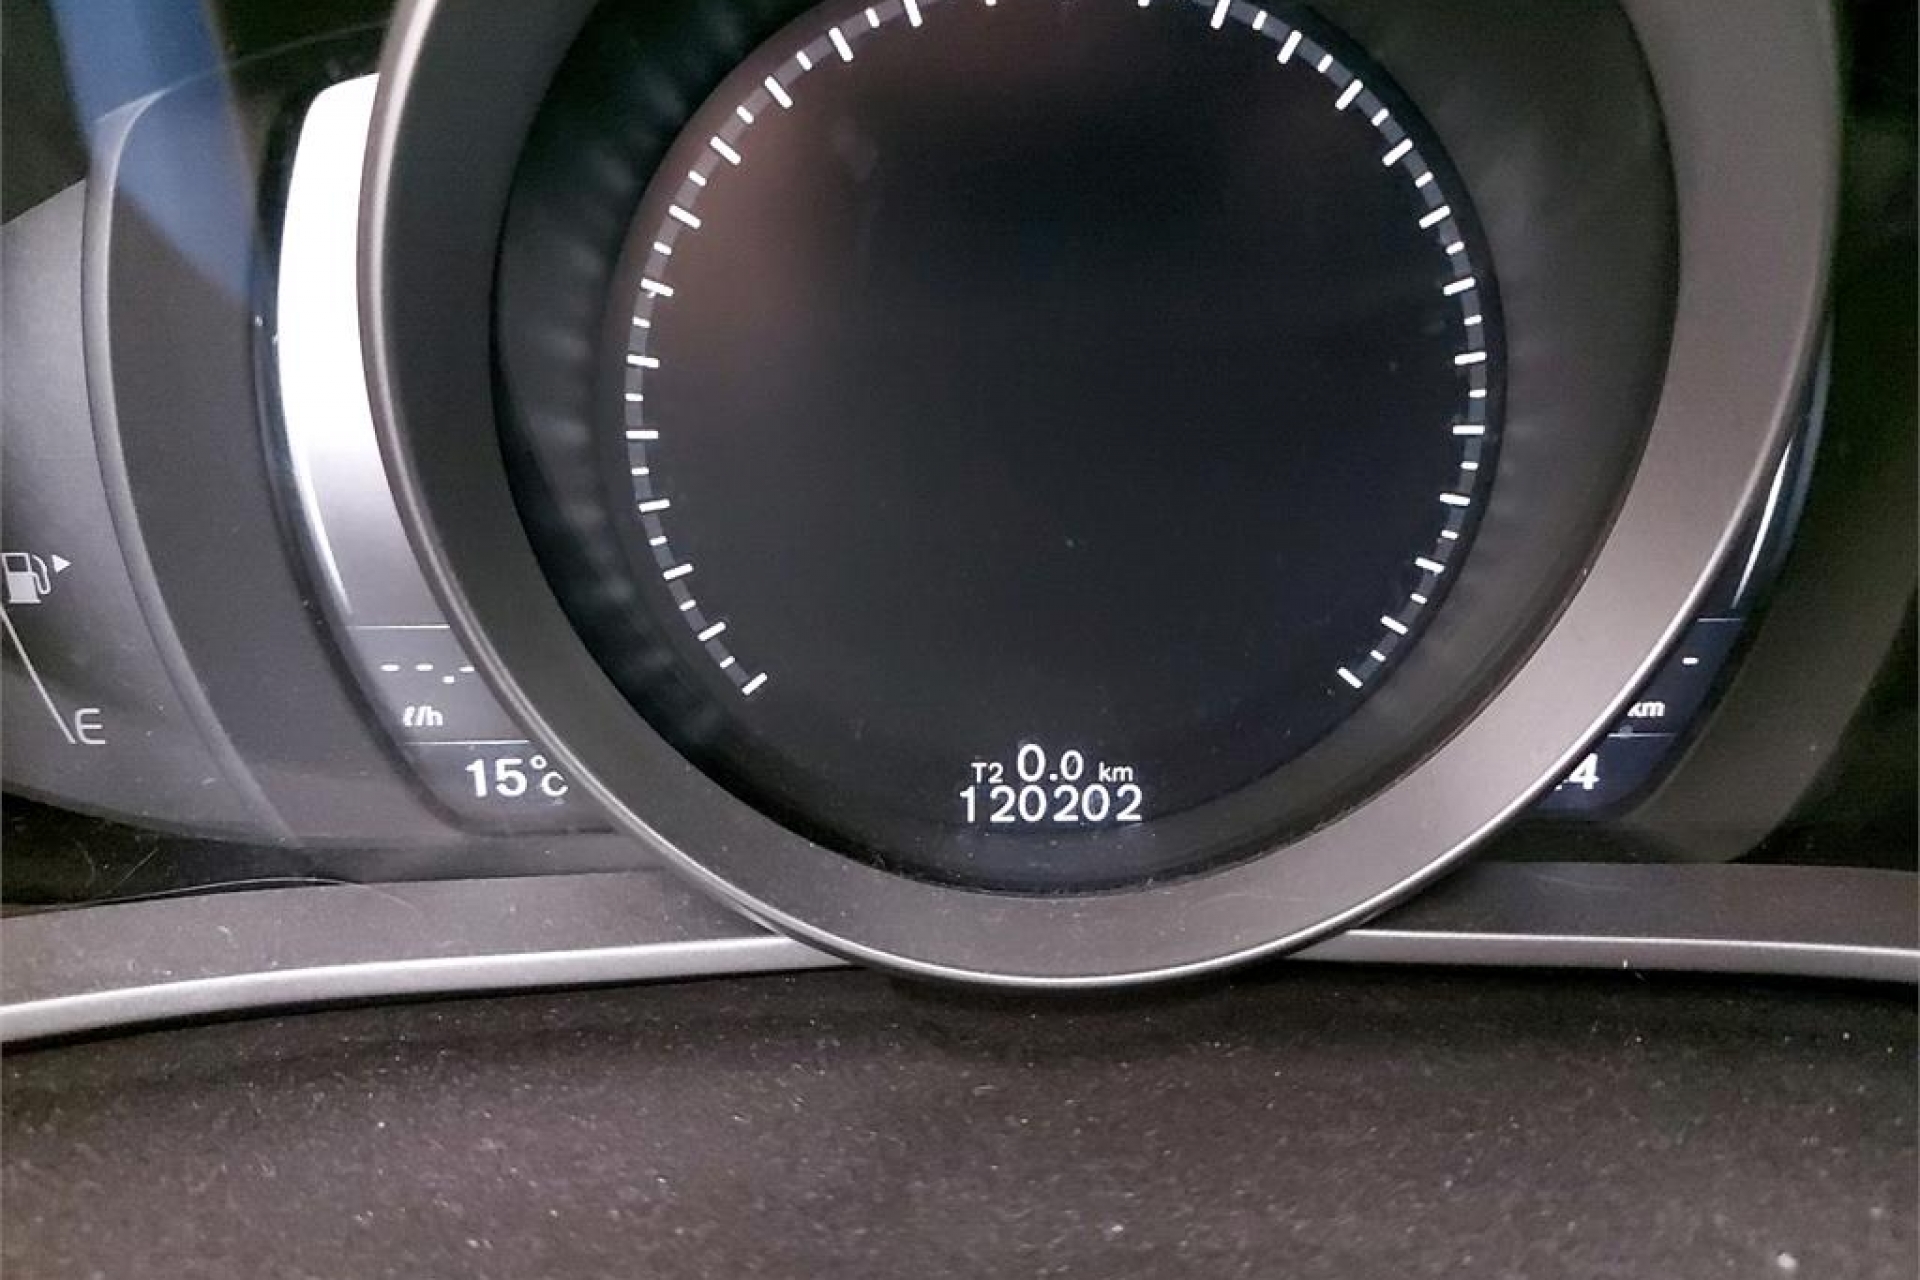 Volvo V40 2.0 D2  Geartronic INSCRIPTION EXCLUSIVE 120KS FULL-LED VIRTUAL COCKPIT Navigacija Parktronic Kamera MAX-VOLL -New Modell 2018-